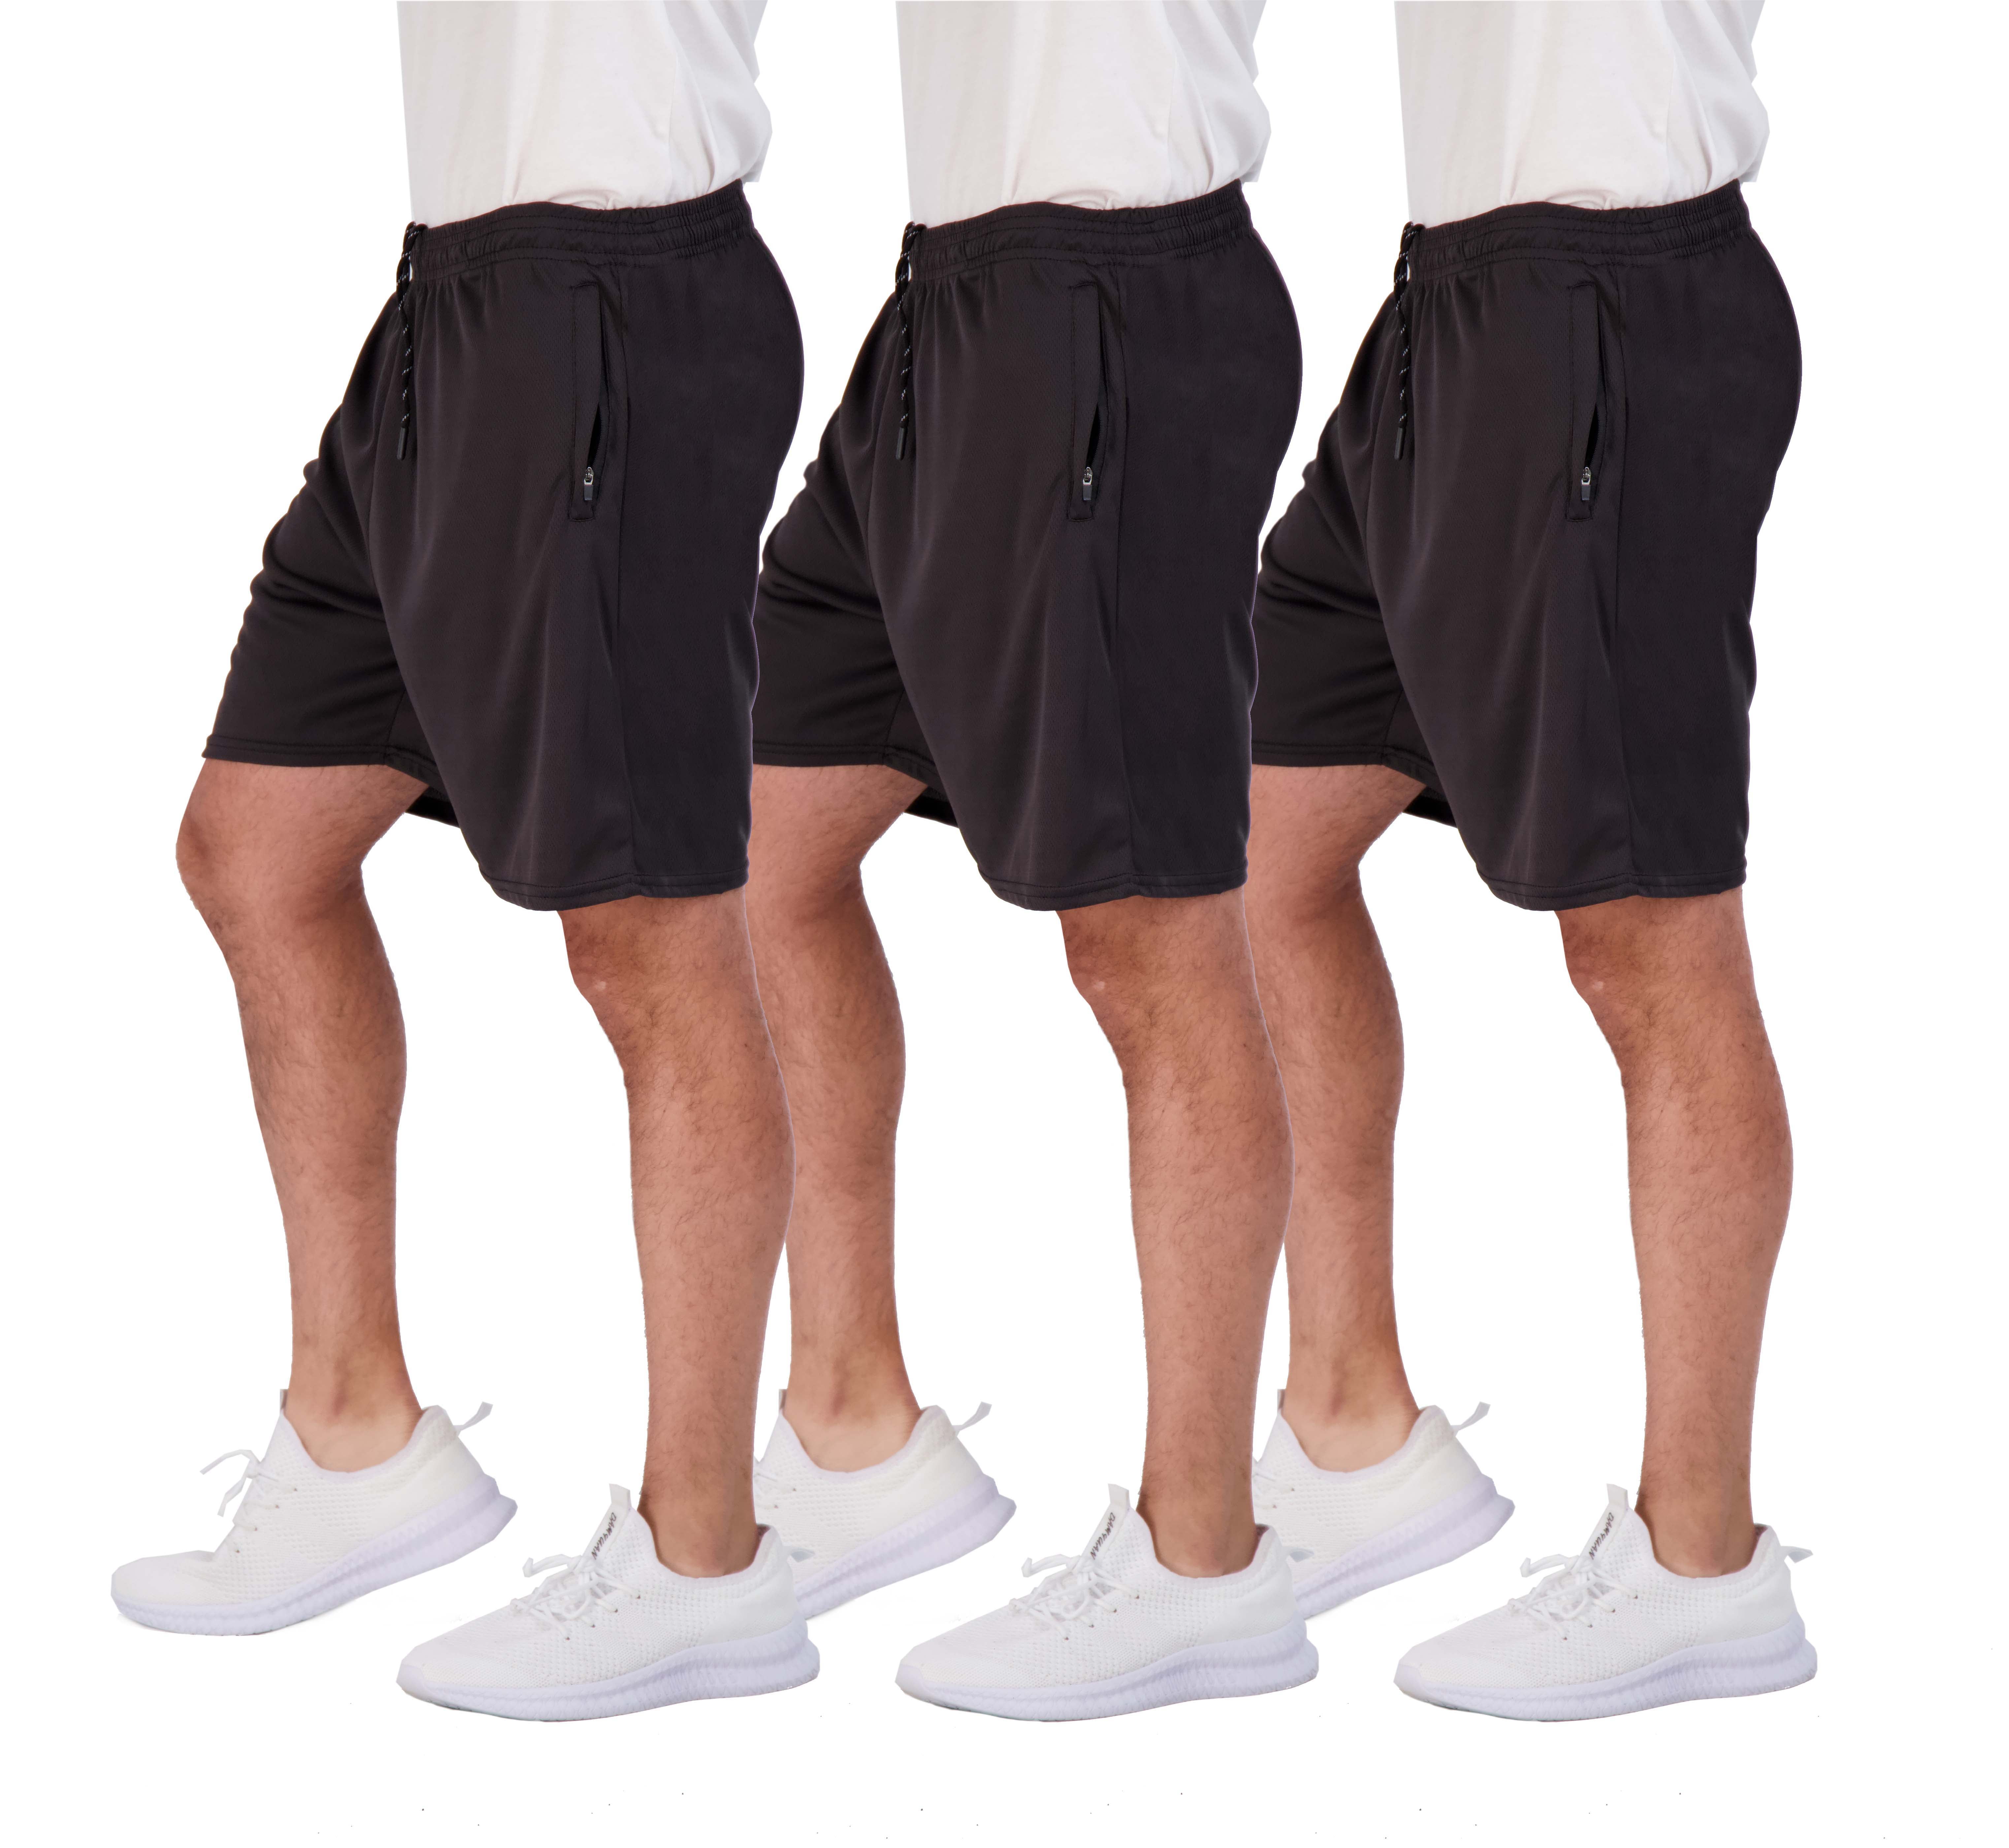 BROKIG Mens Gym Shorts Athletic Running Mesh Shorts Activewear Quick-Dry with Pockets 